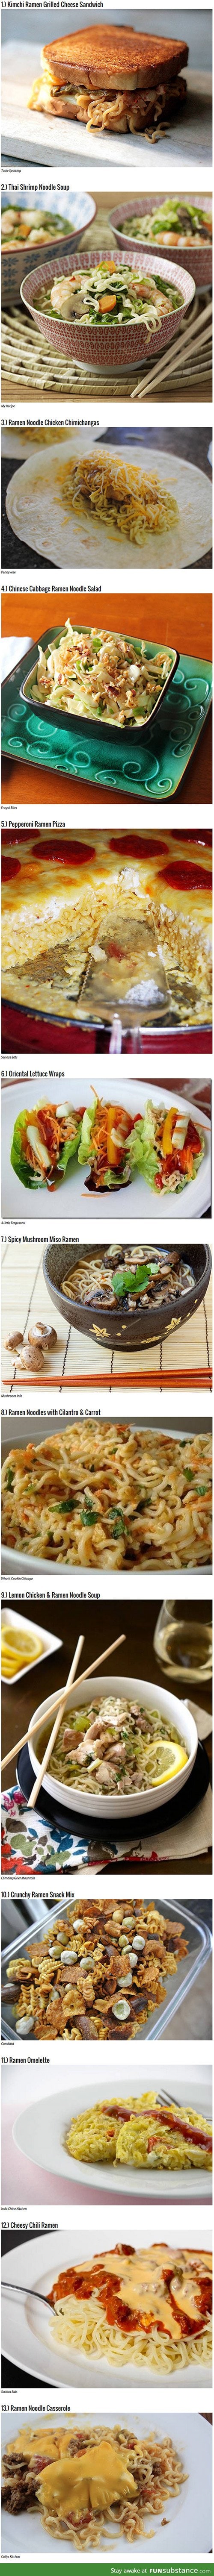 13 Creative Ways To Cook Your Ramen Noodles